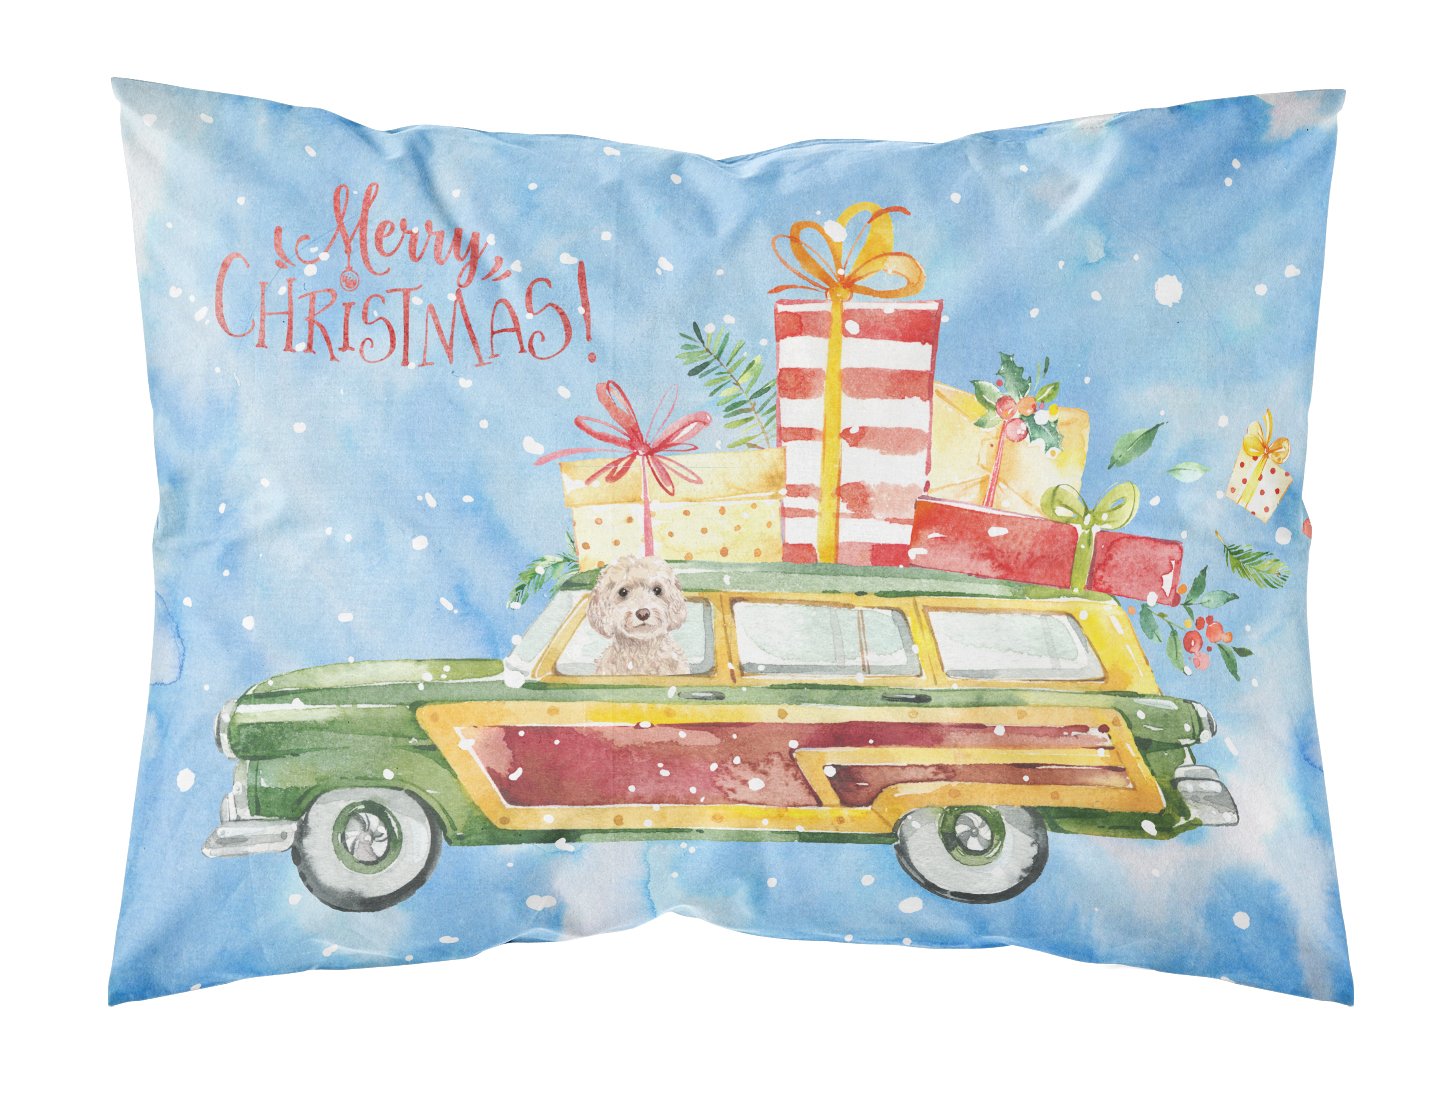 Merry Christmas Champagne Cockapoo Fabric Standard Pillowcase CK2448PILLOWCASE by Caroline's Treasures